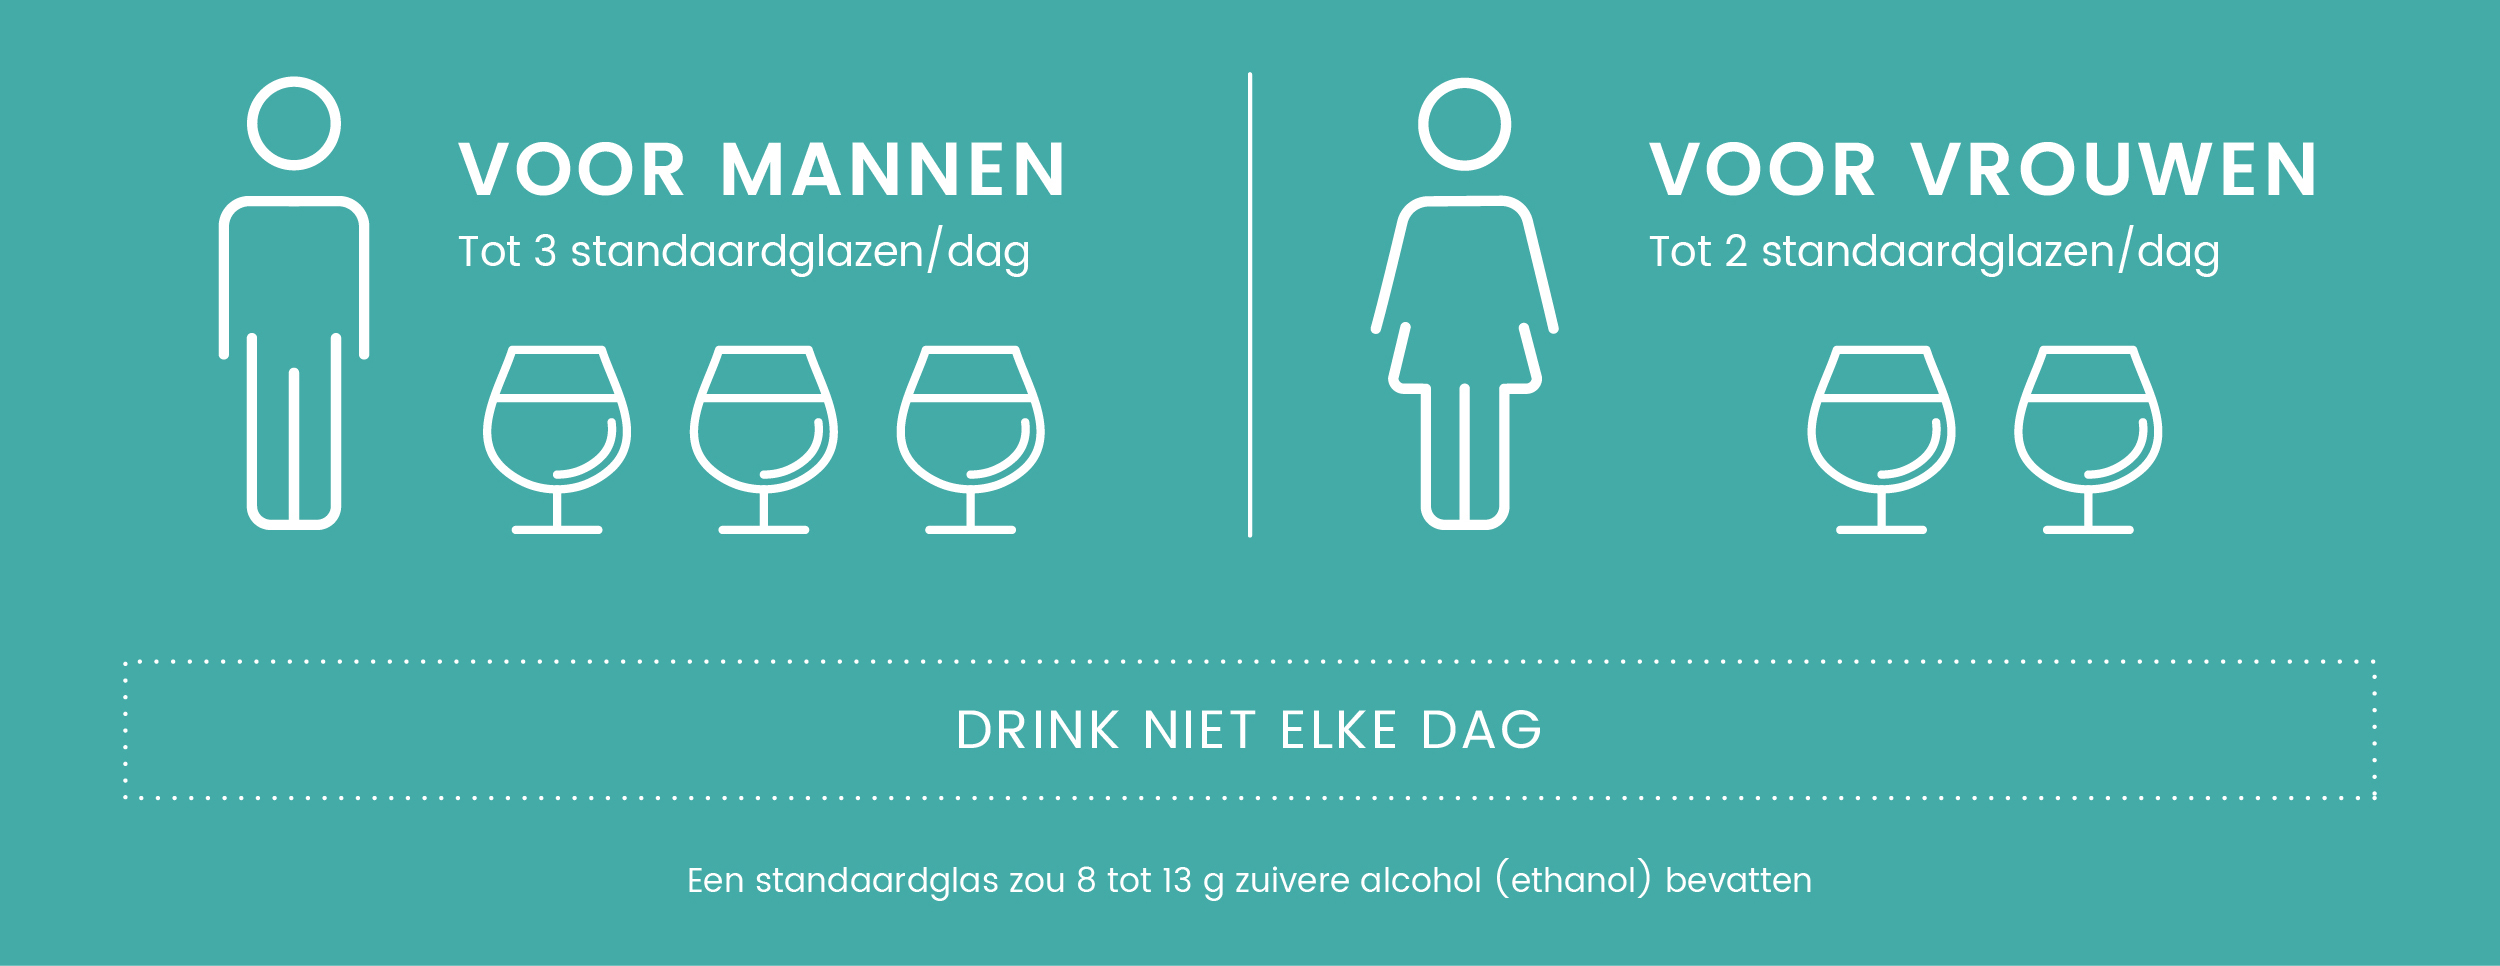 info-alcohol-manvrouw-NL